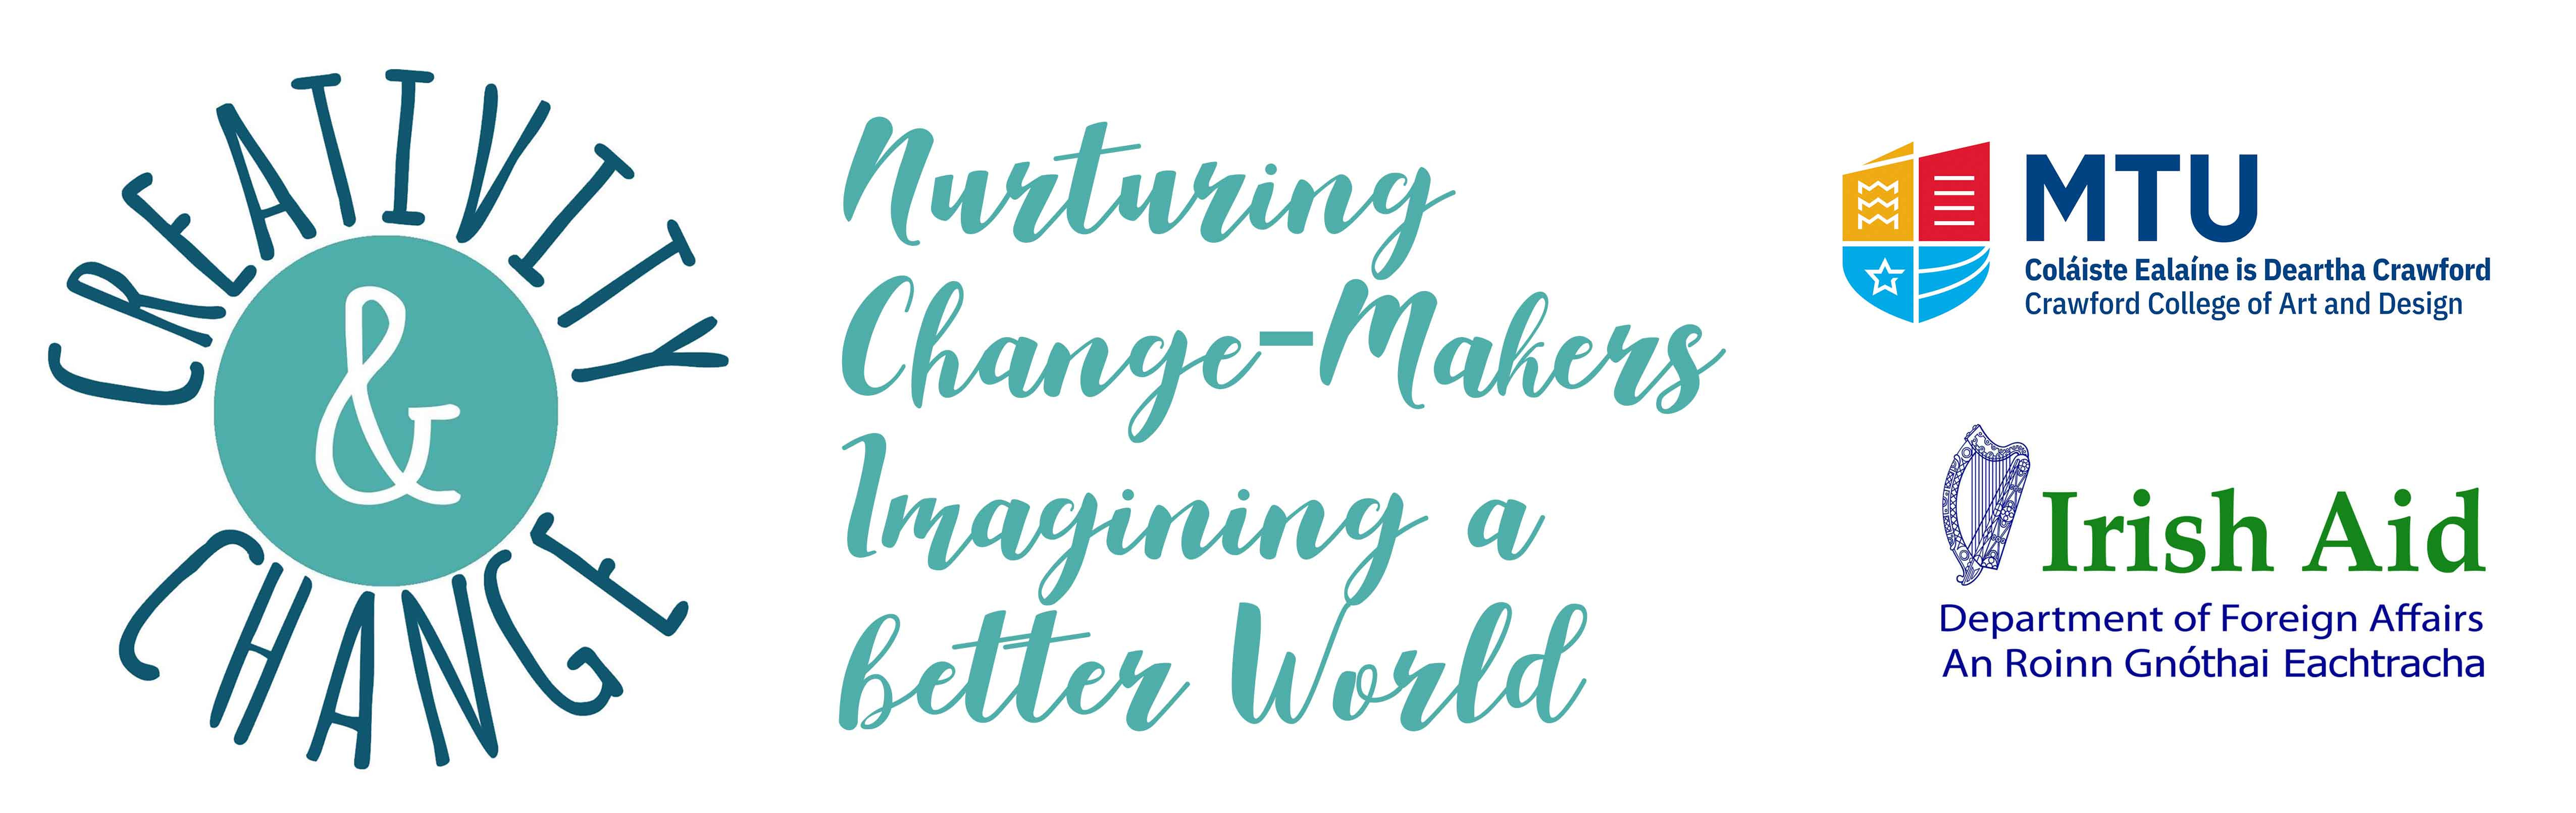 Logo image for MTU Creativity and Change